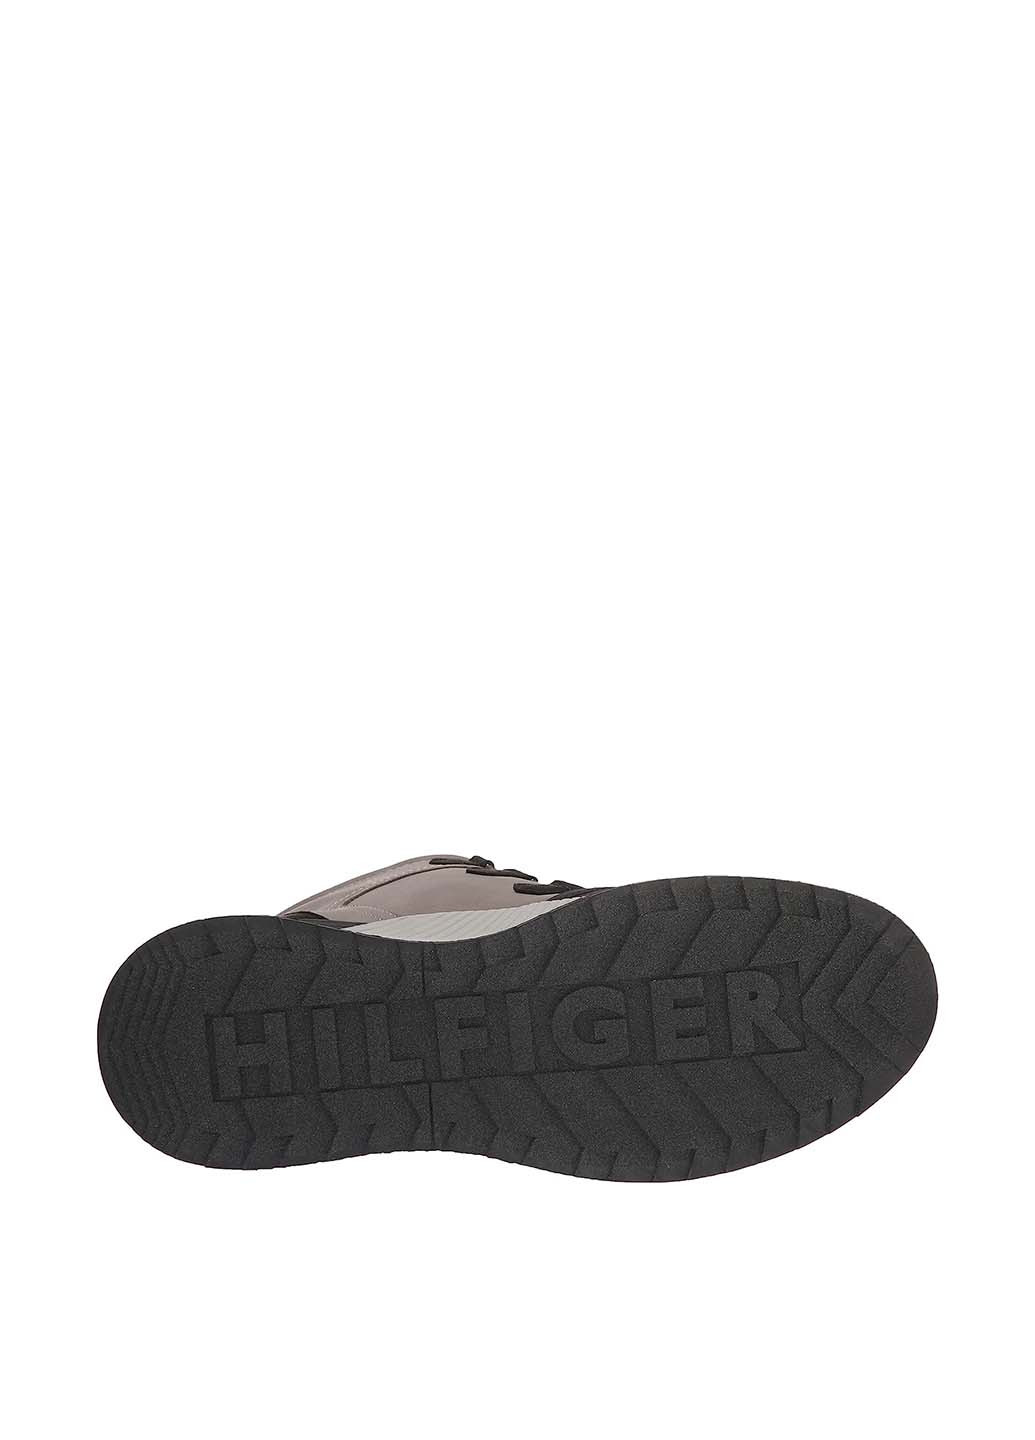 Осенние ботинки Tommy Hilfiger с логотипом из искусственной замши, из искусственной кожи